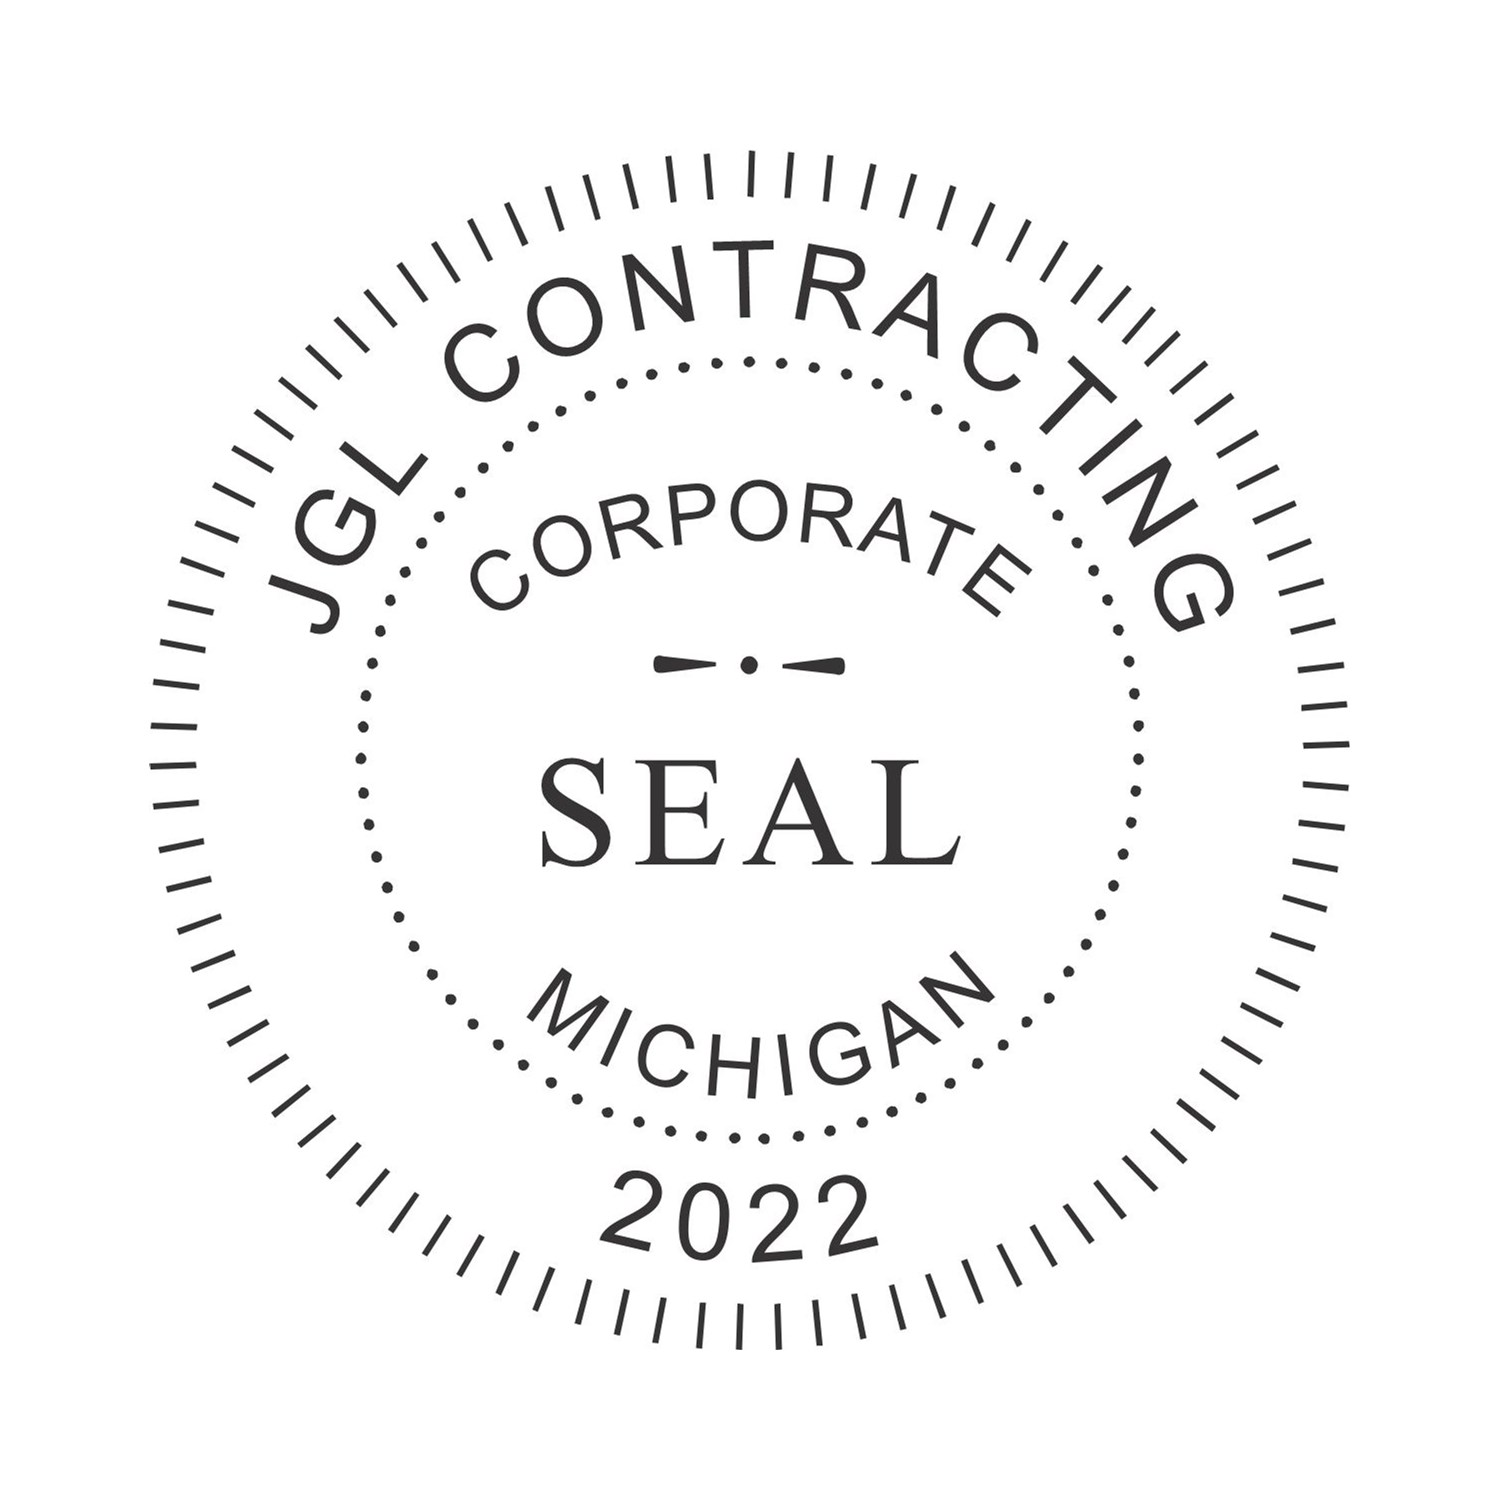 Corporate Seal Stamp - Wood Stamp